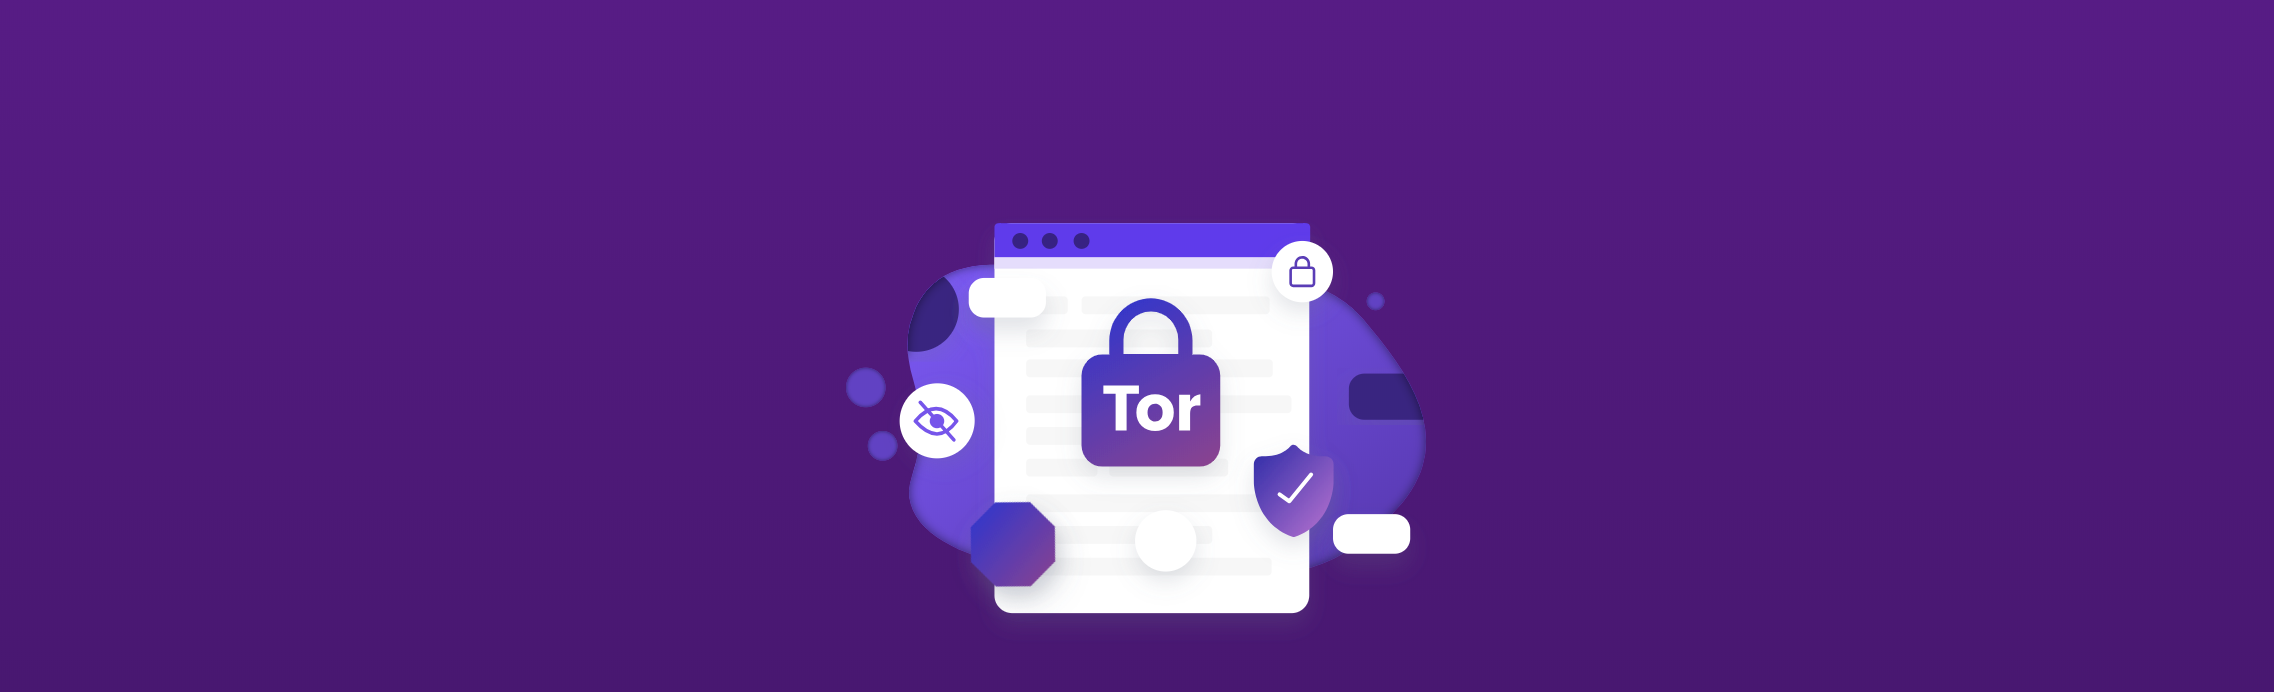 Tor powered browser gidra тор скачать браузер portable hyrda